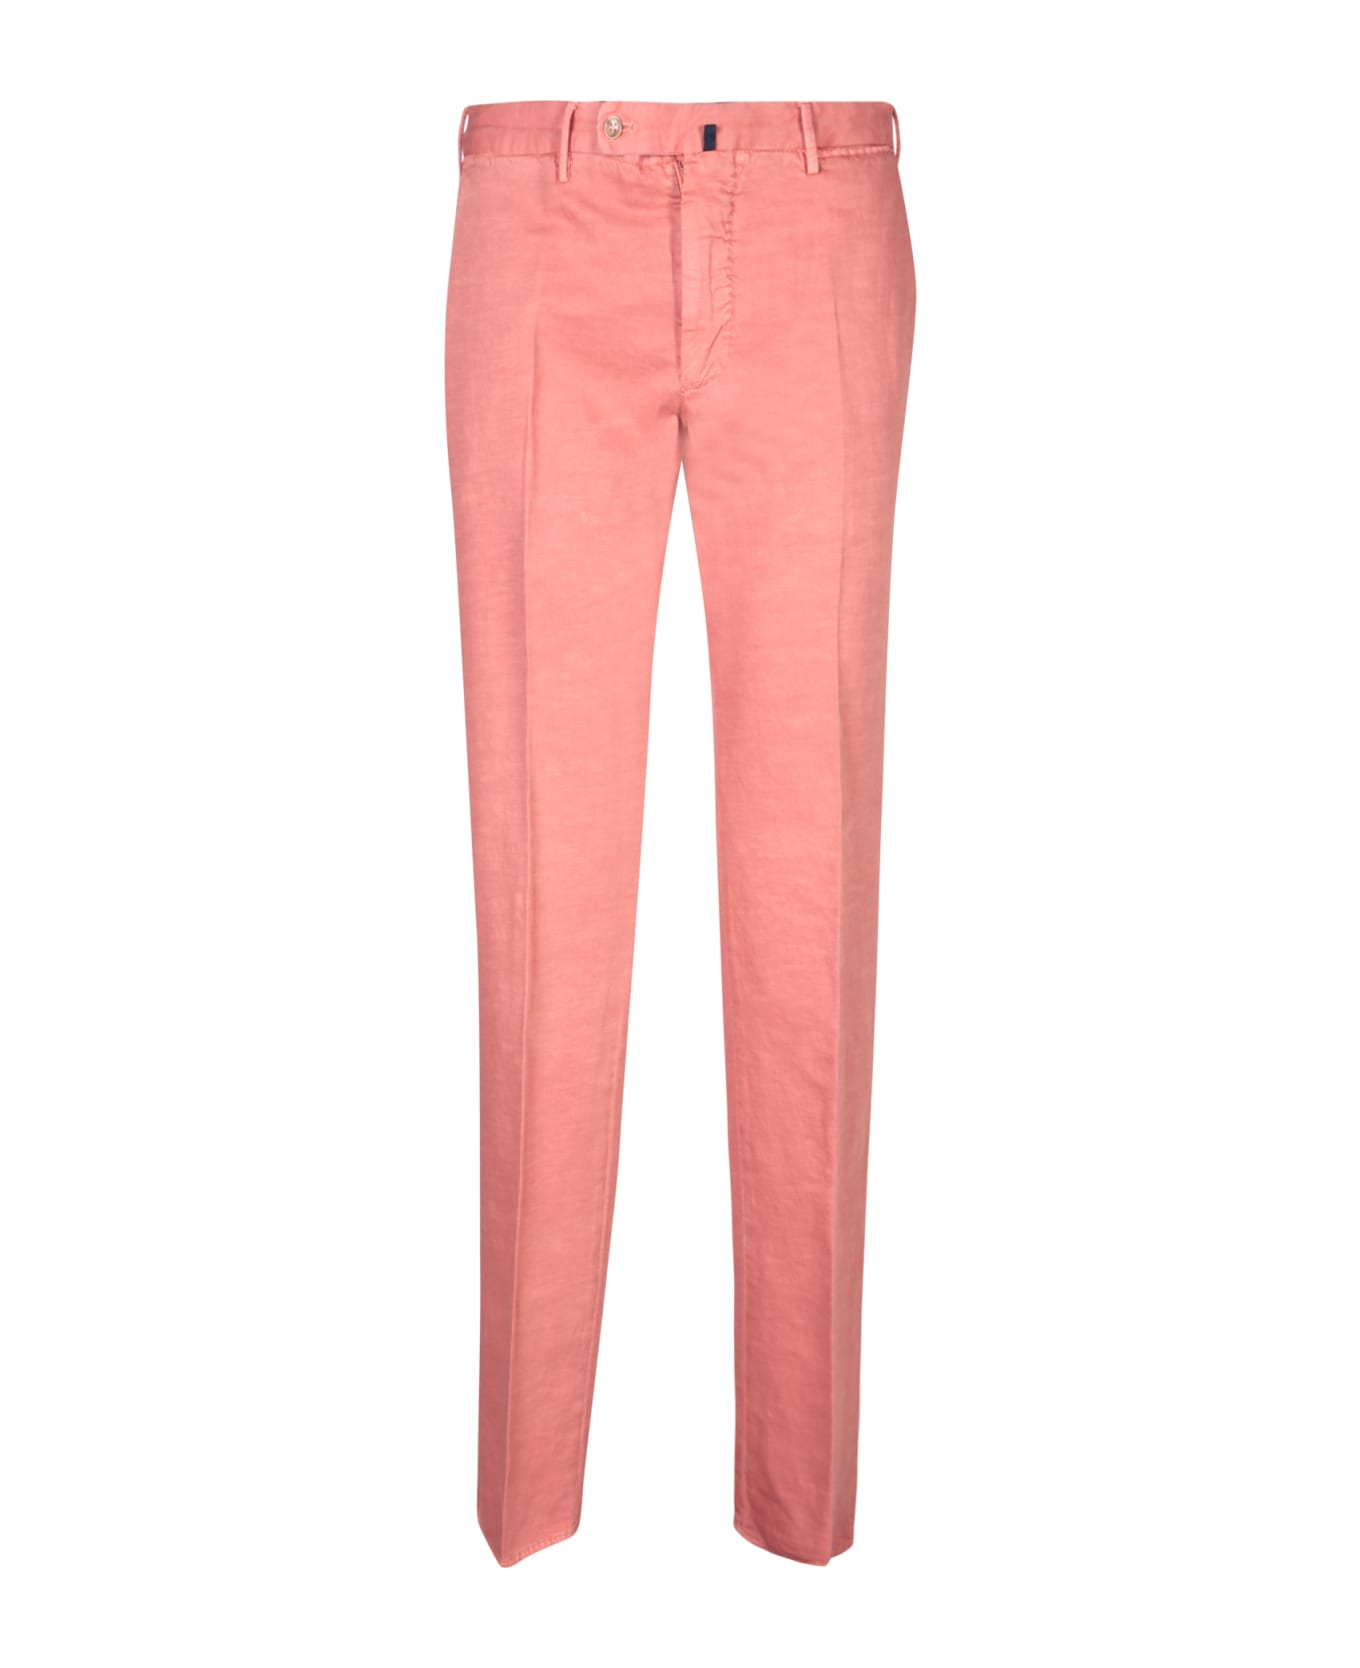 Incotex Pink Chino Linen Trousers By Incotex - Pink